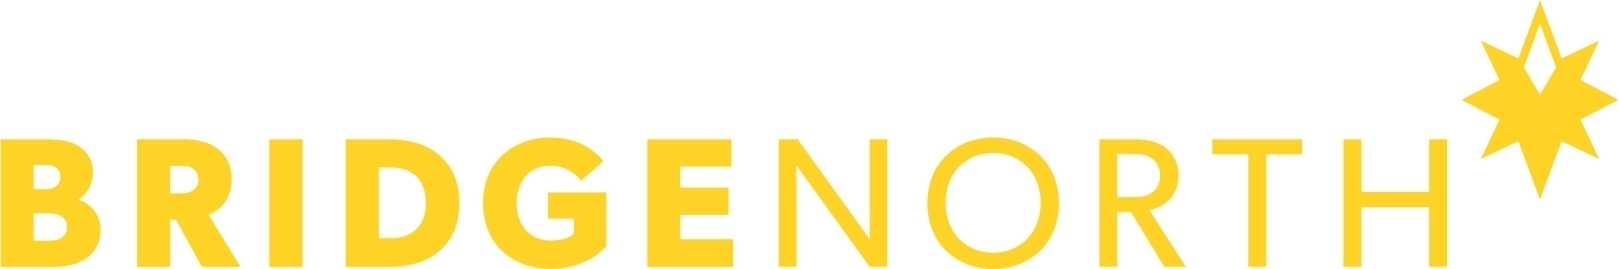 BridgeNorth logo